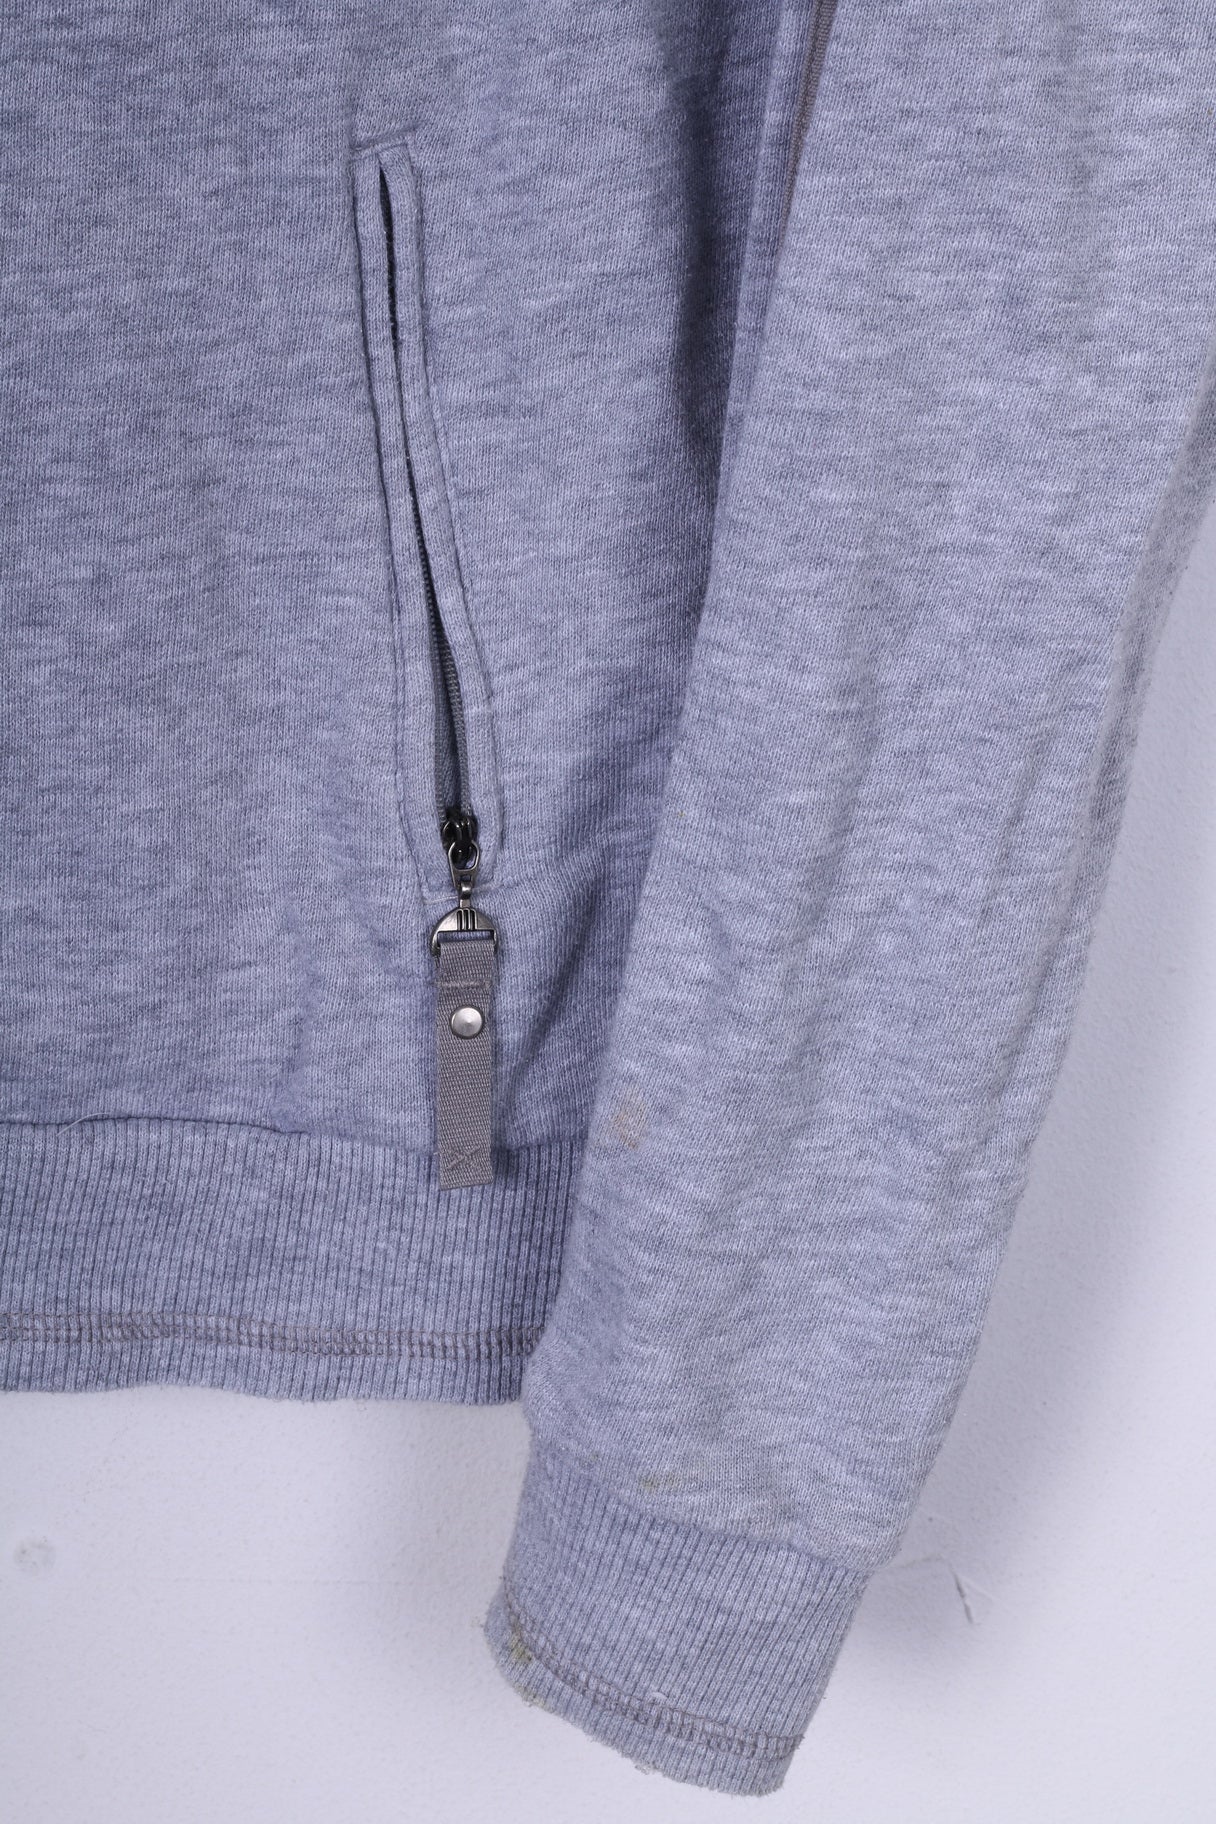 Adidas Womens 18 44 L Sweatshirt Grey Jumper Zip Up Sportswear Cotton Top